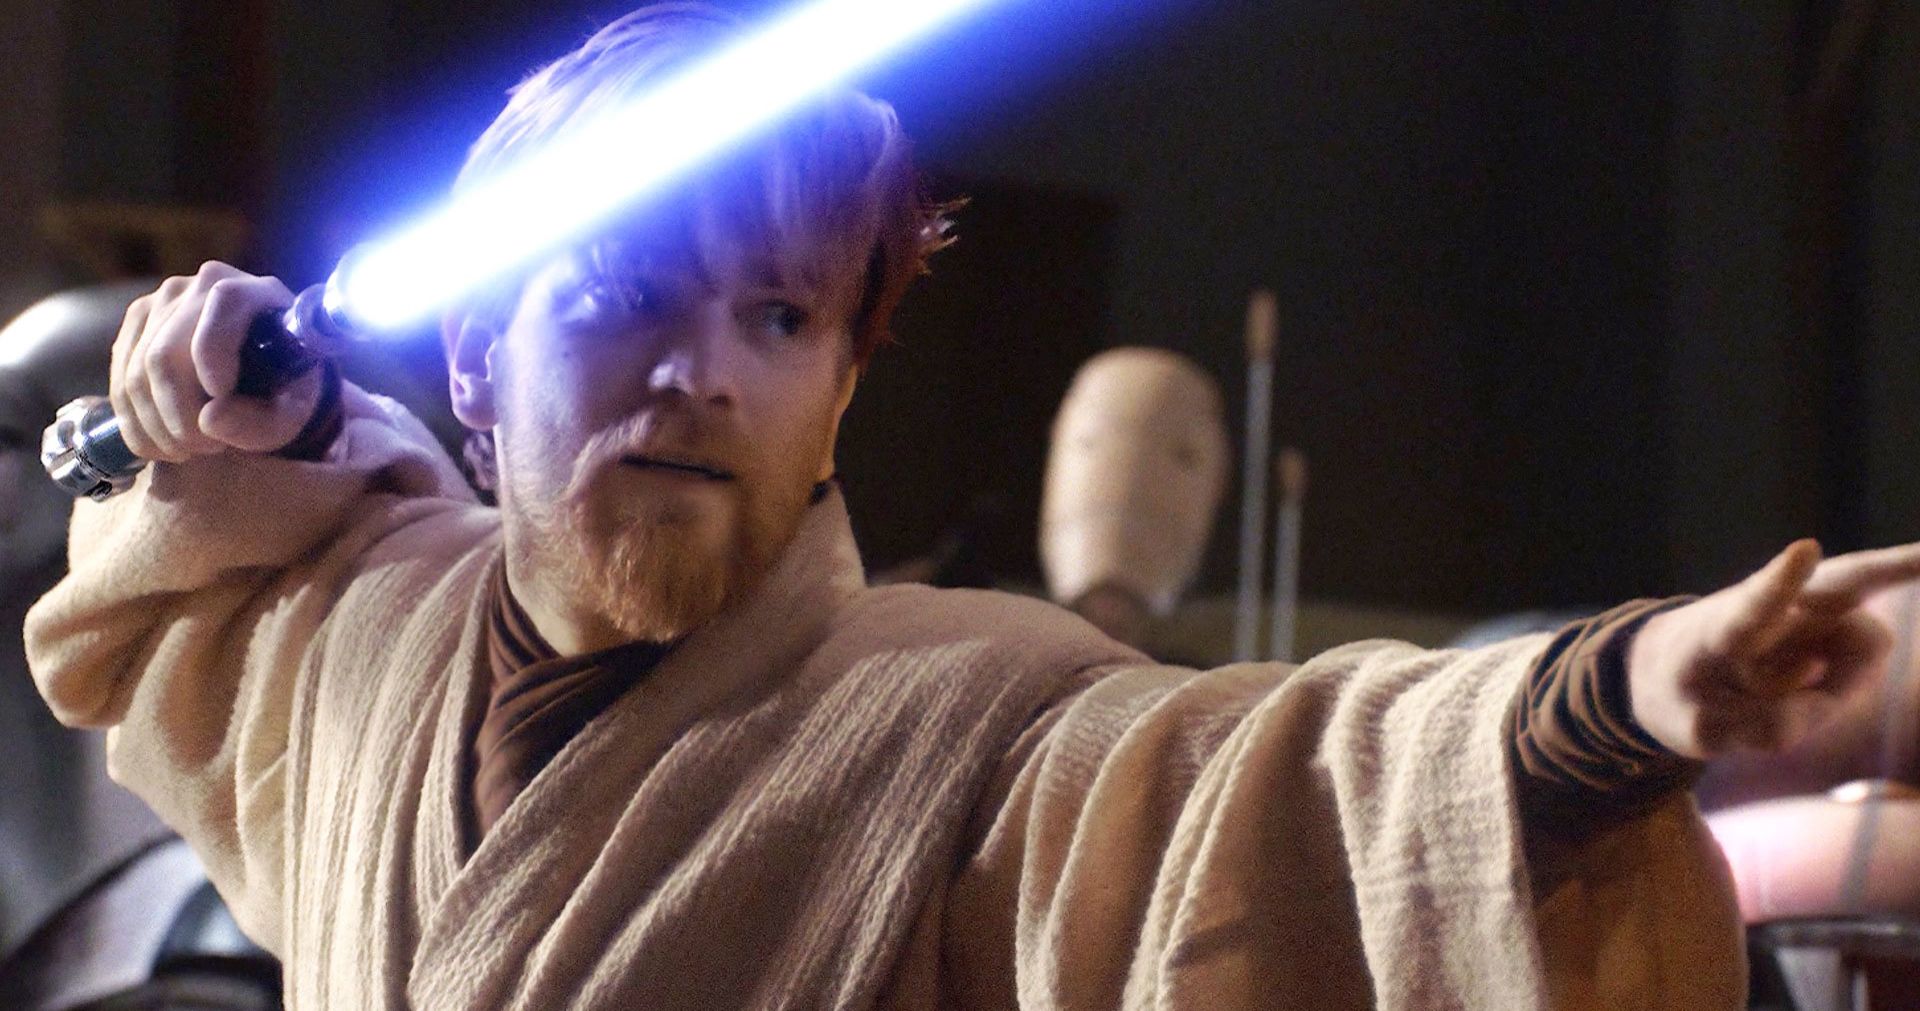 Obi-Wan Kenobi Disney+ Series with Ewan McGregor Officially Announced